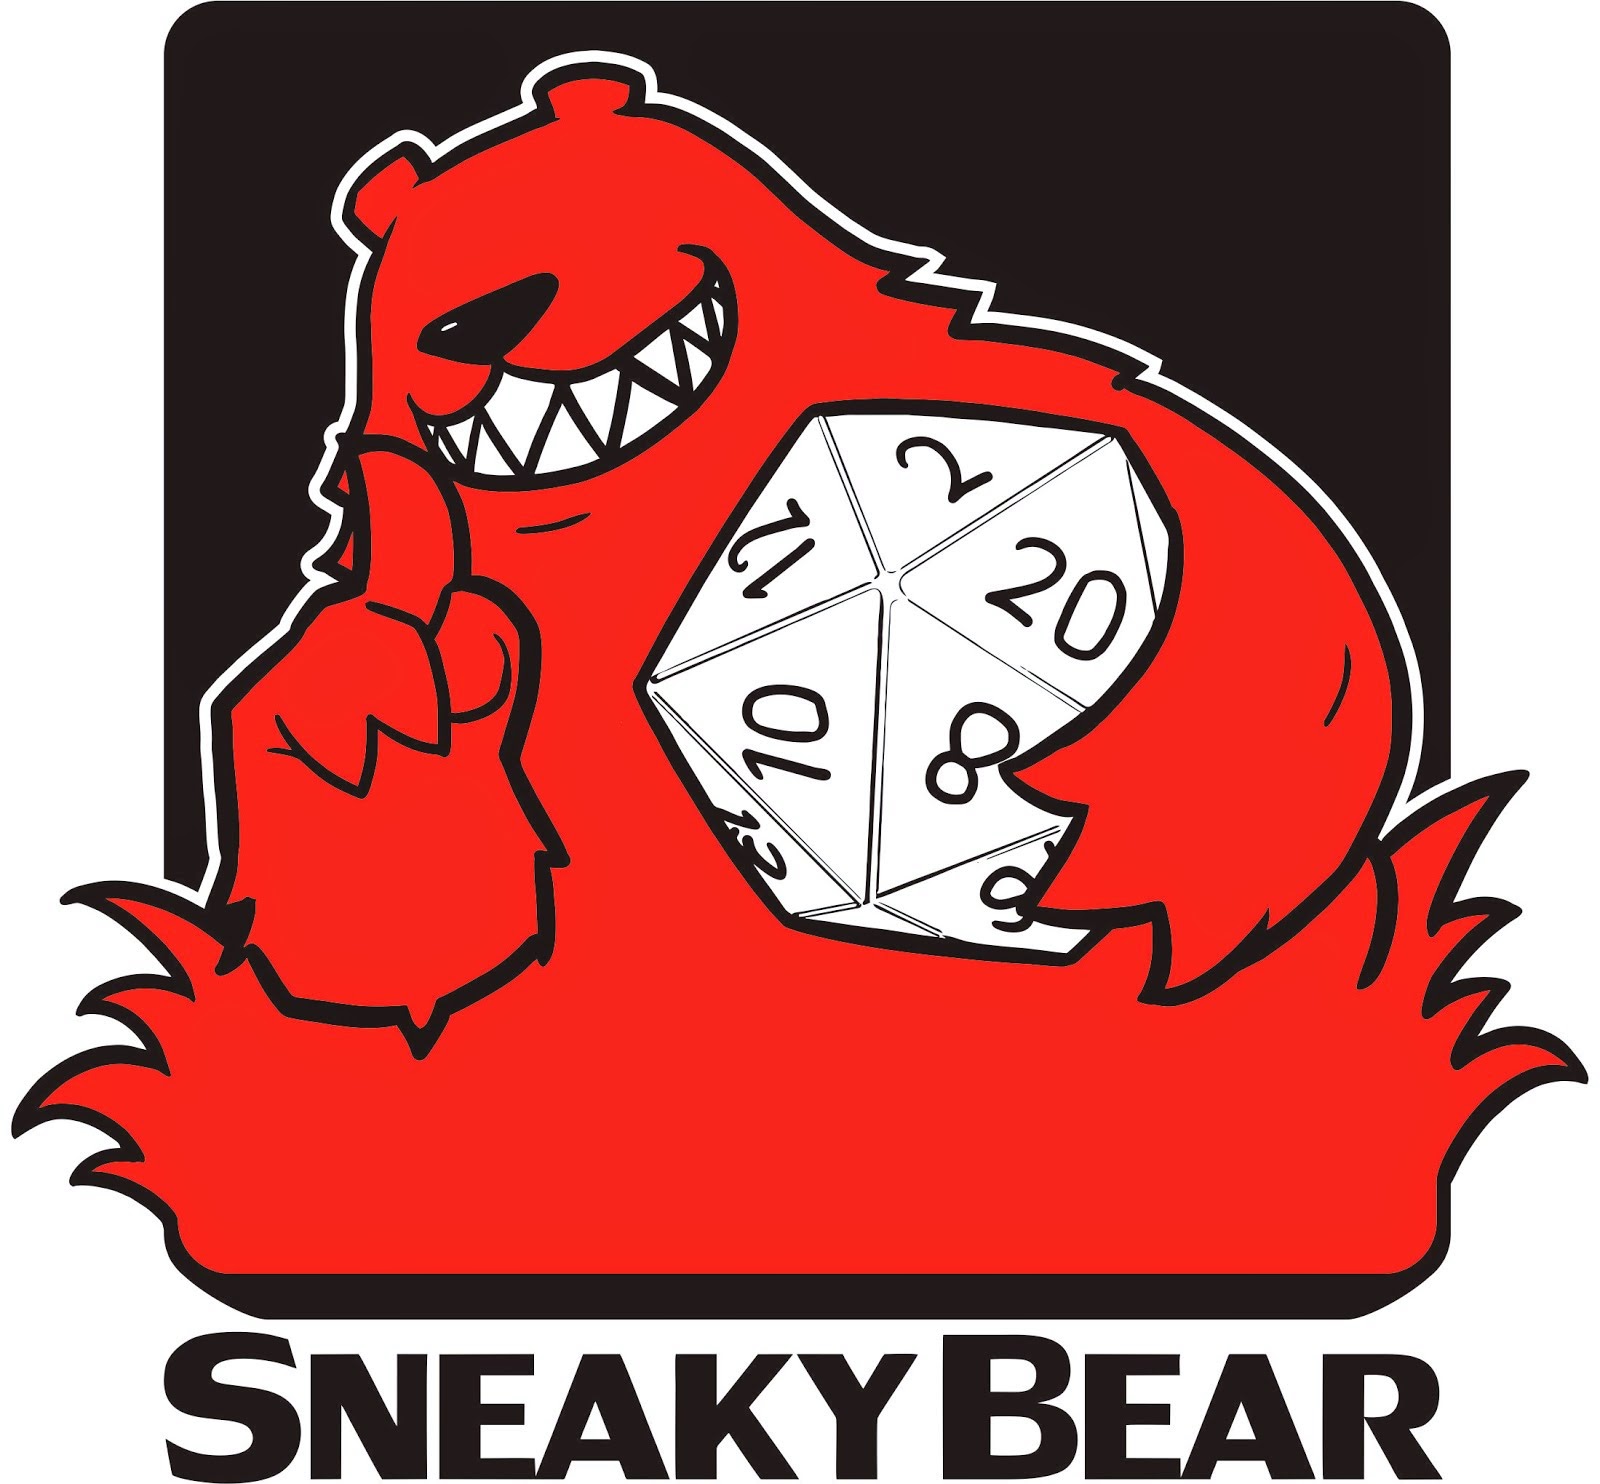 SNEAKY BEAR